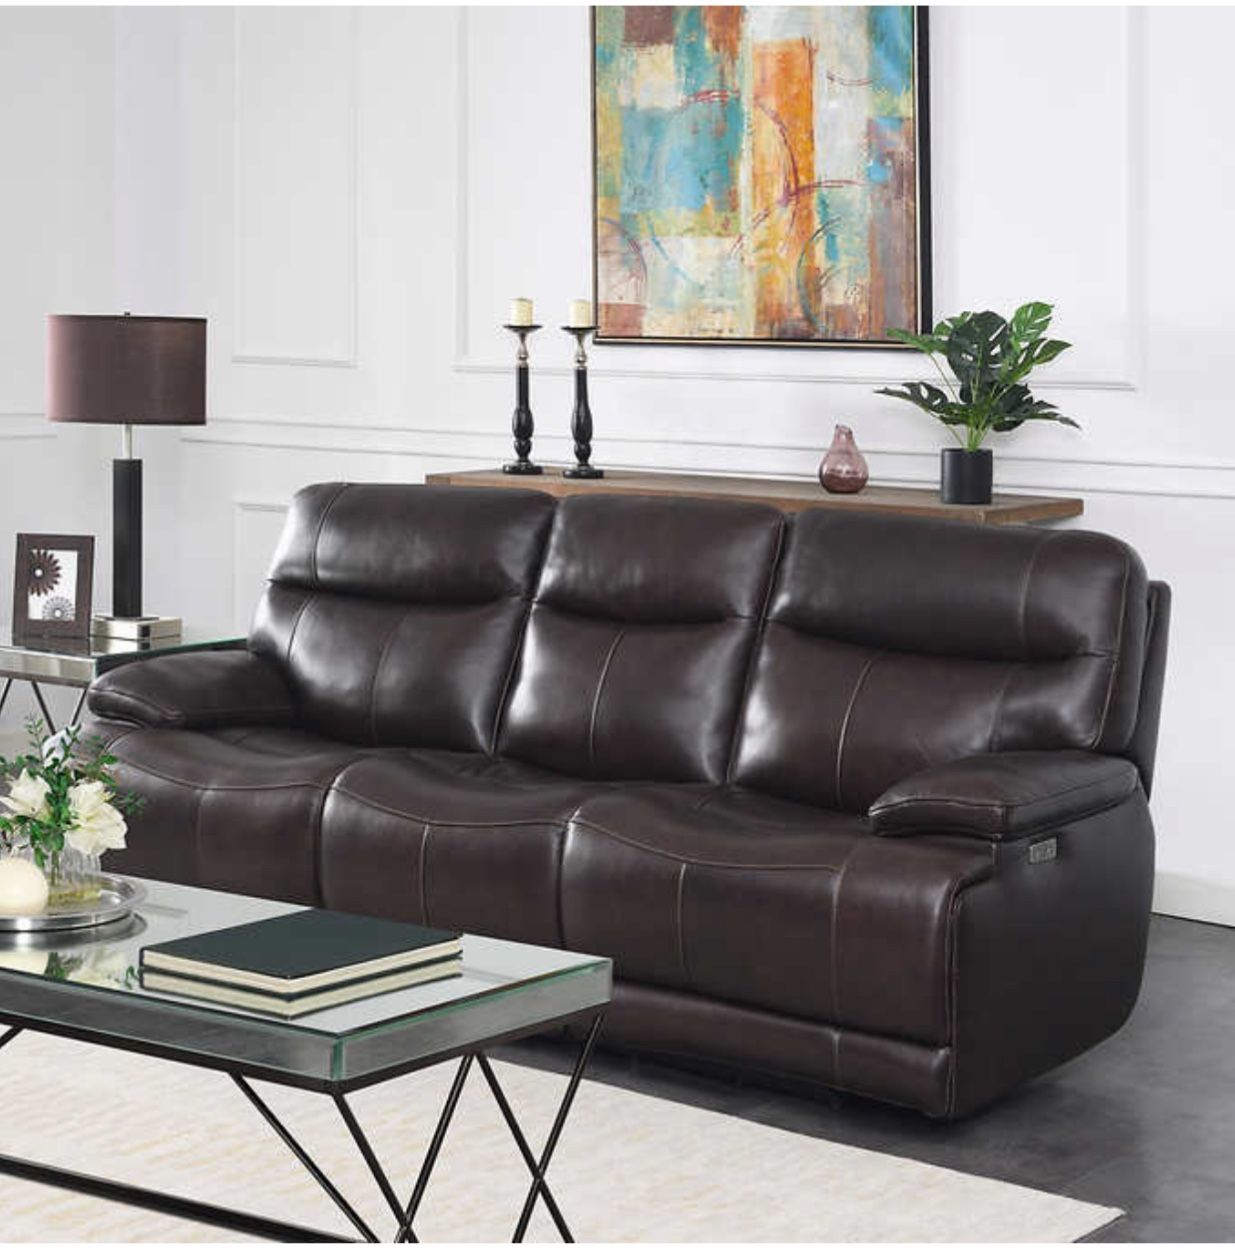 **Ridgeline Leather Reclining Sofa-New! Great Price!